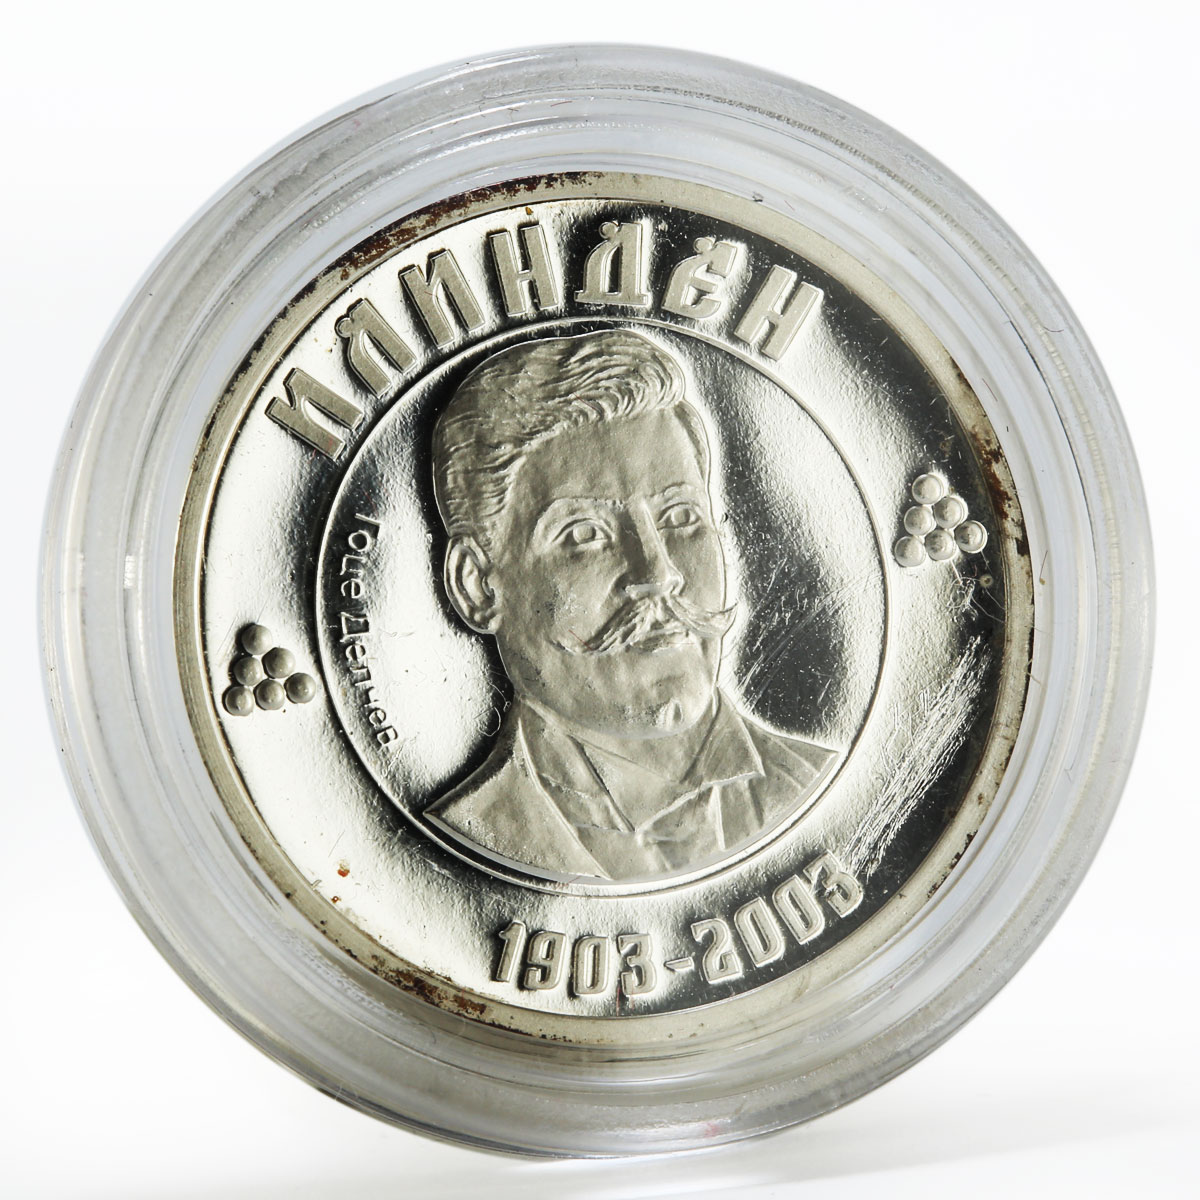 Macedonia 100 denari Gotse Delchev revolutionary proof silver coin 2003